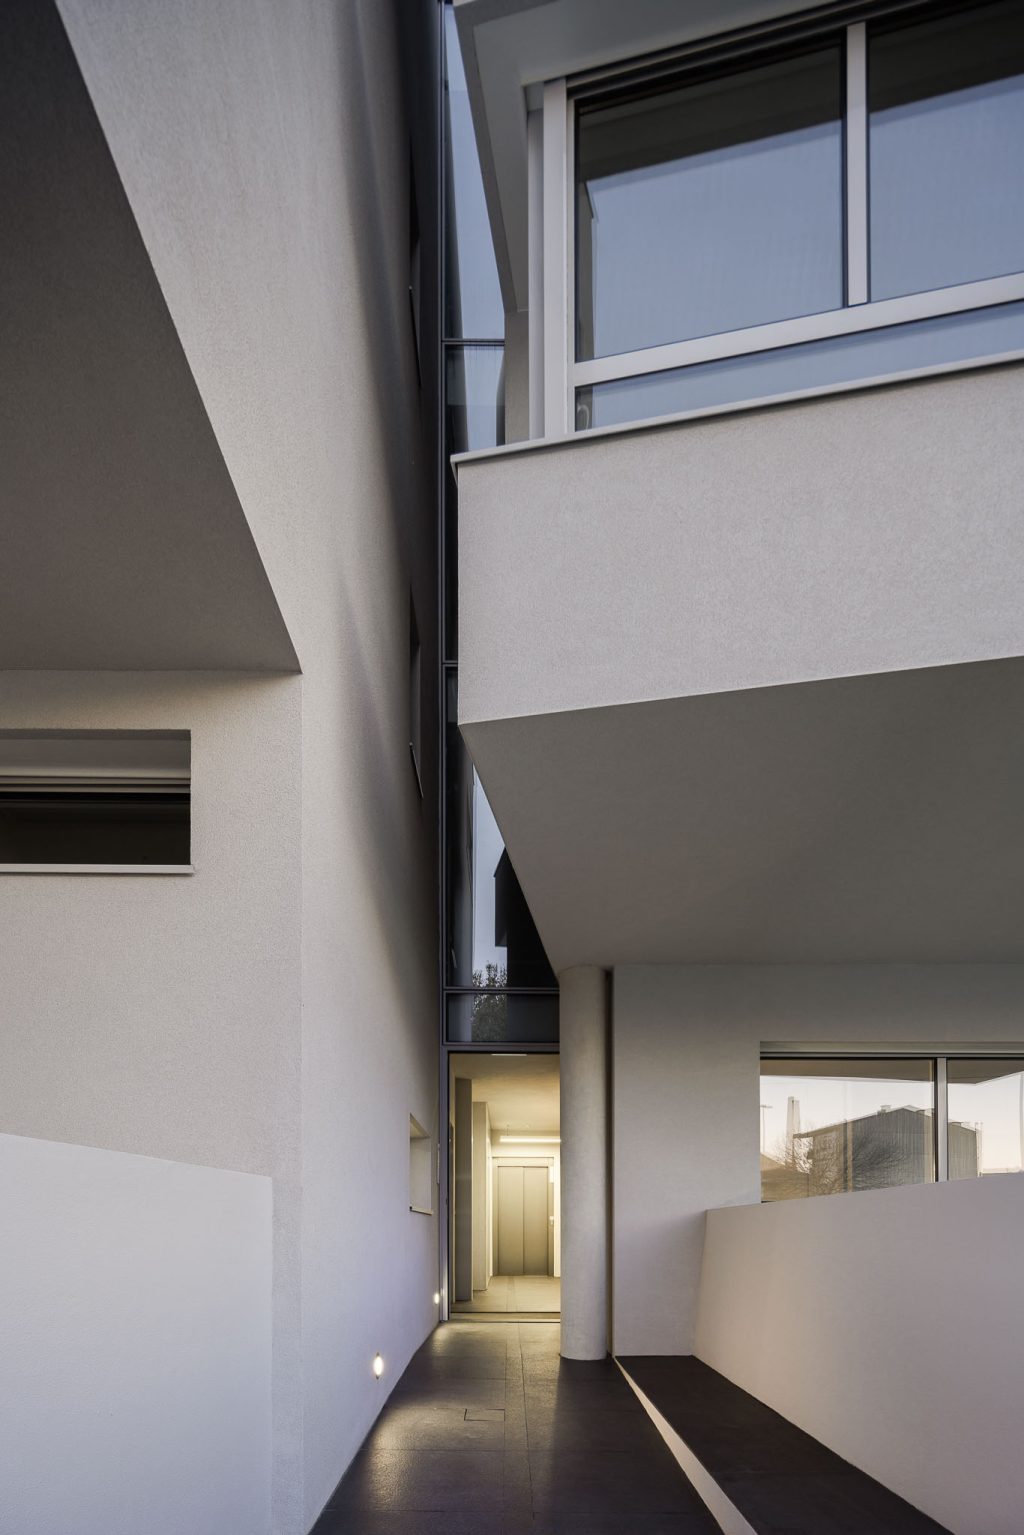 Nova Rio Housing contemporary architecture that challenges conventions. Antonio Paulo Marques